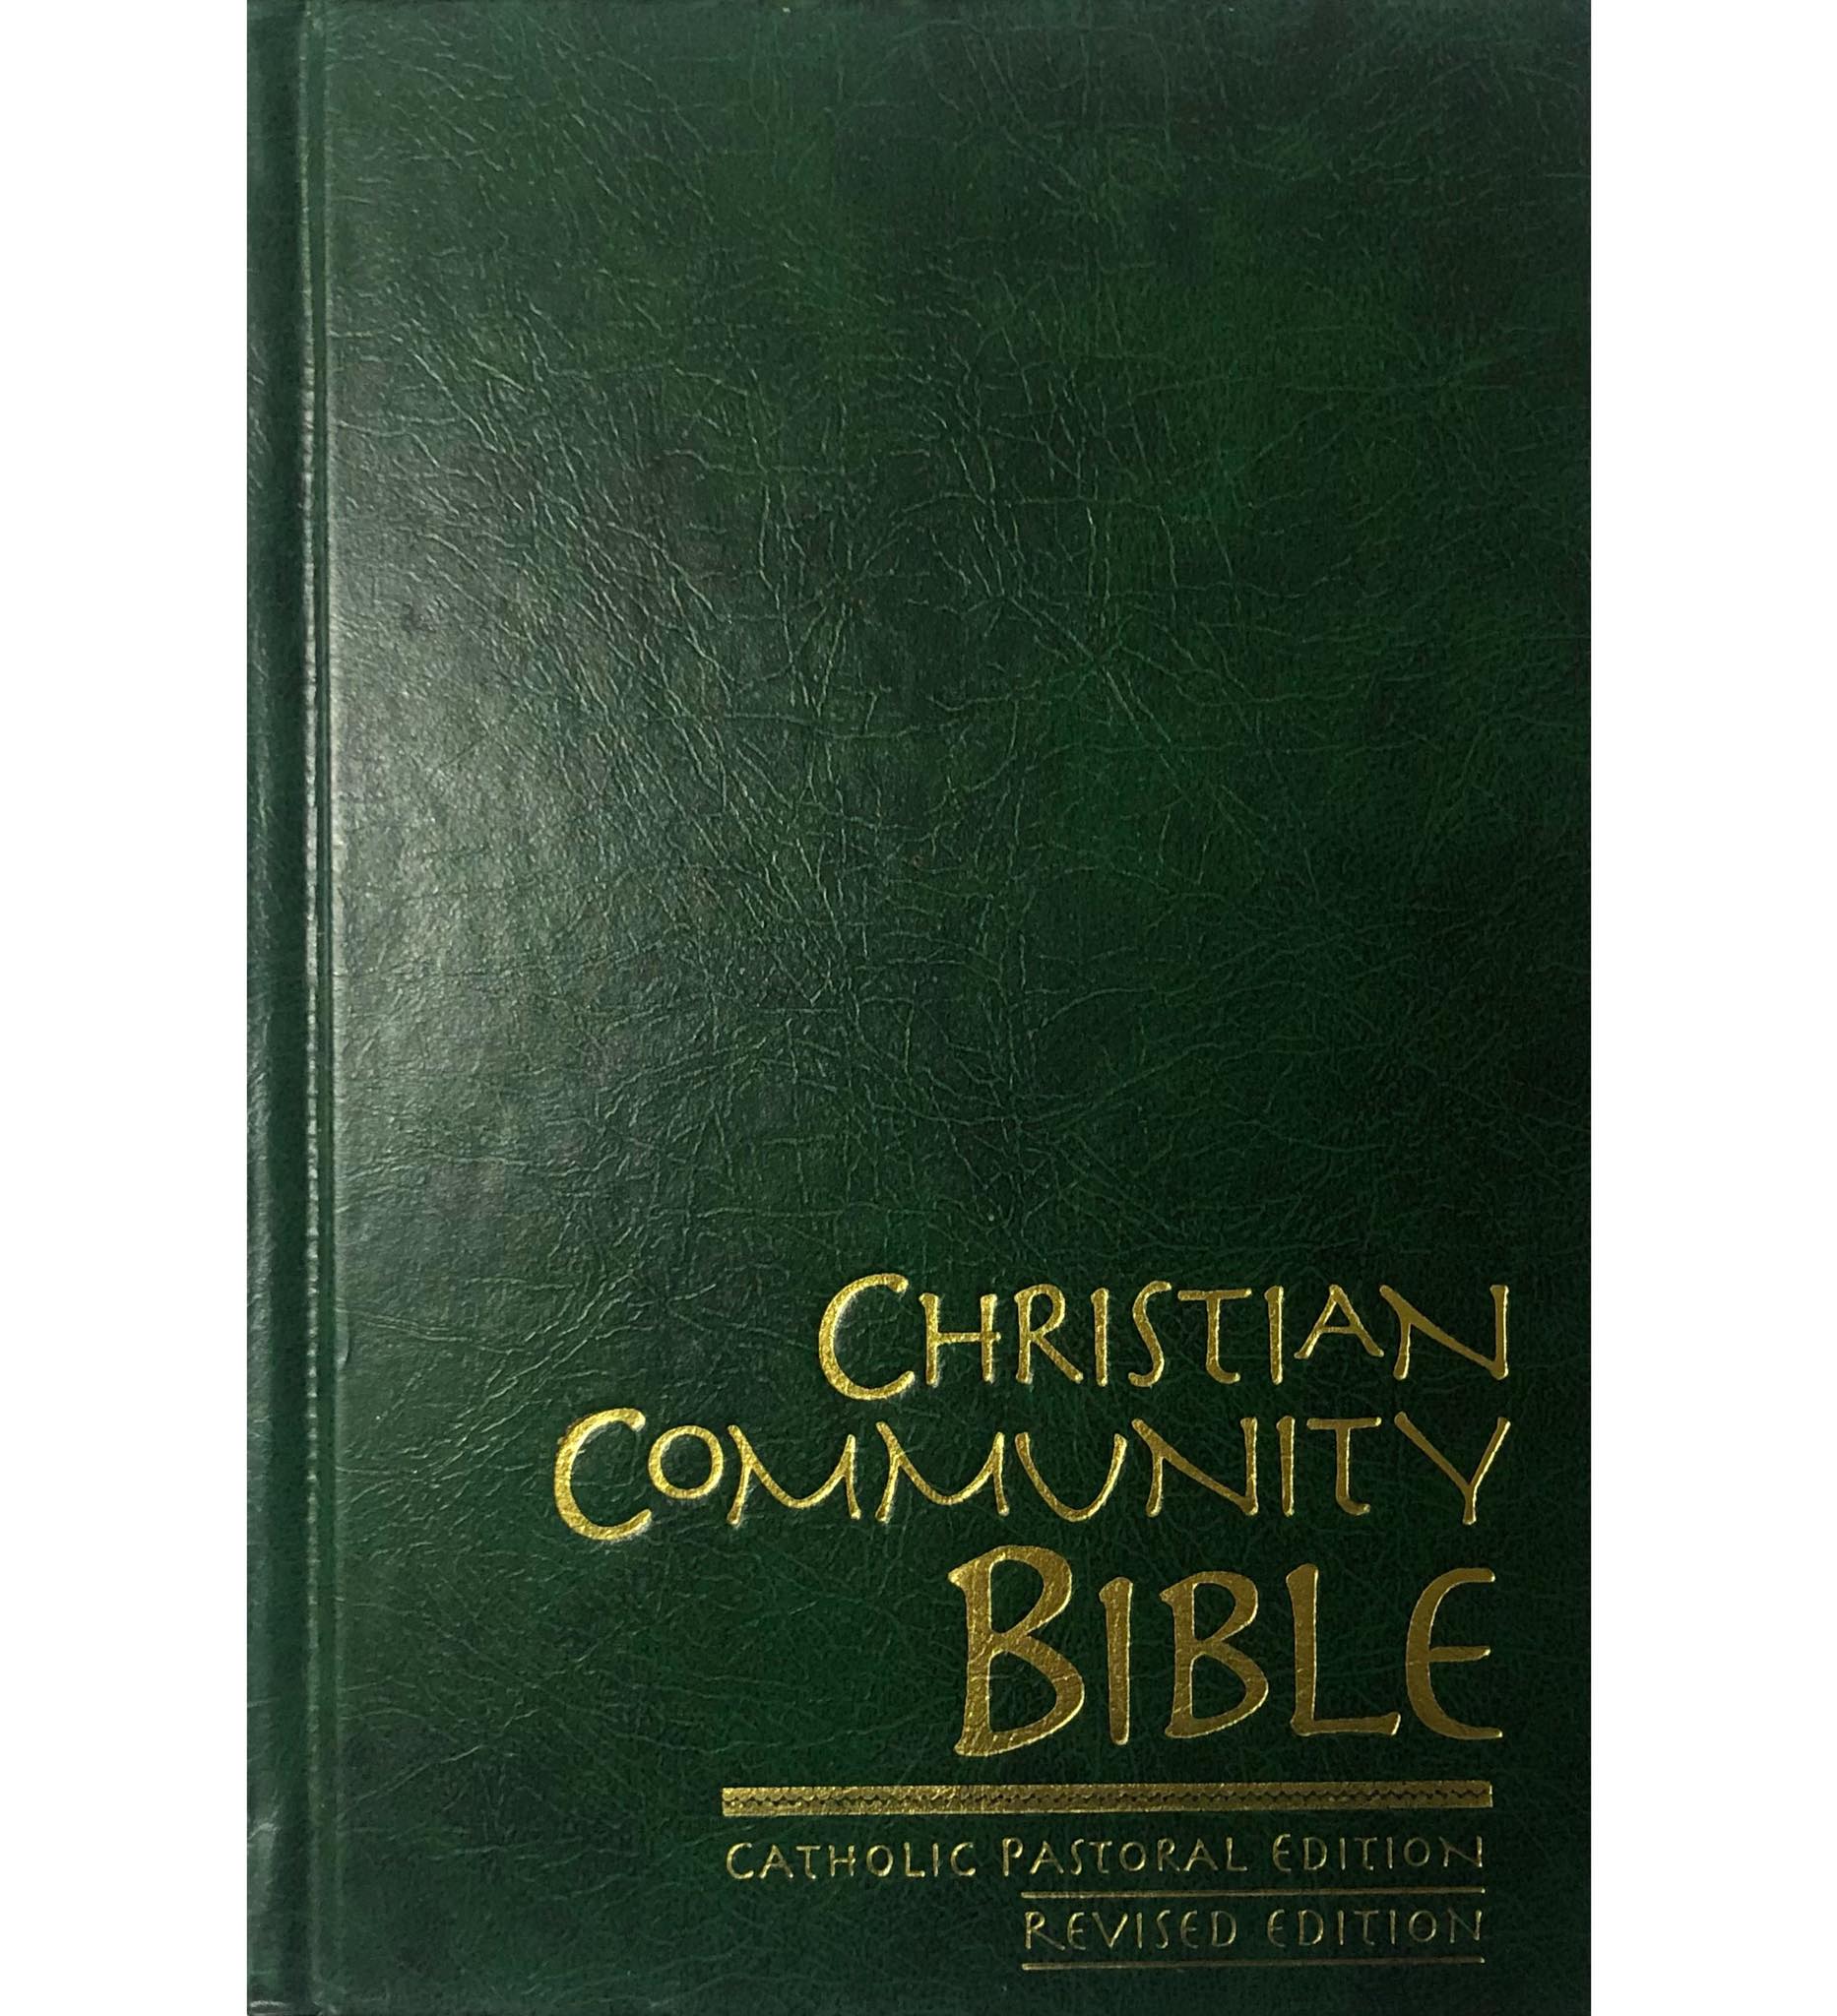 Catholic Christian Community Bible - Small Hardback